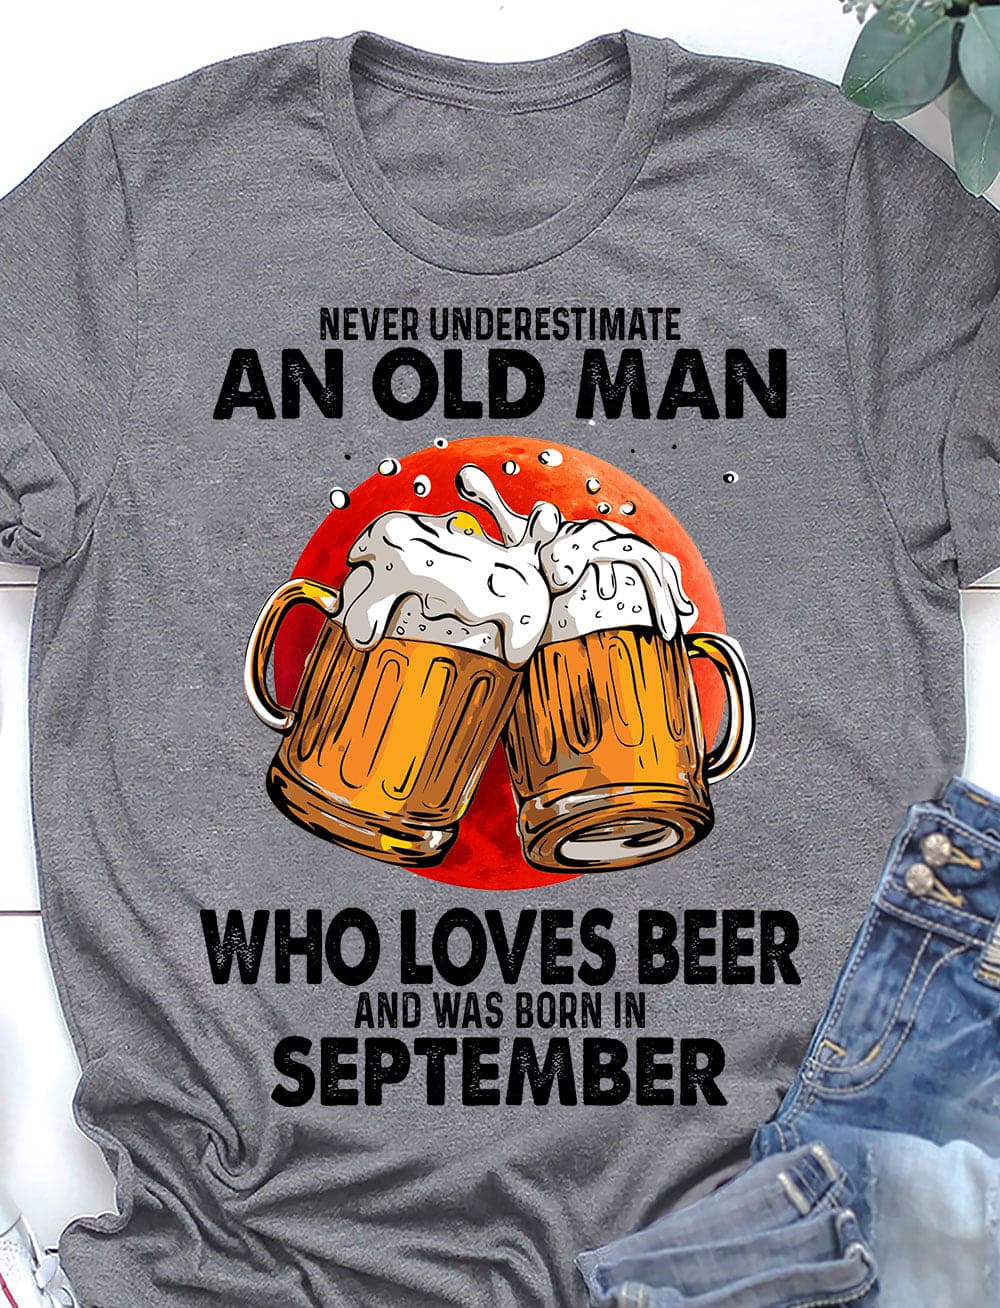 Never underestimate an old man who loves beer and was born in September - September beer drinker